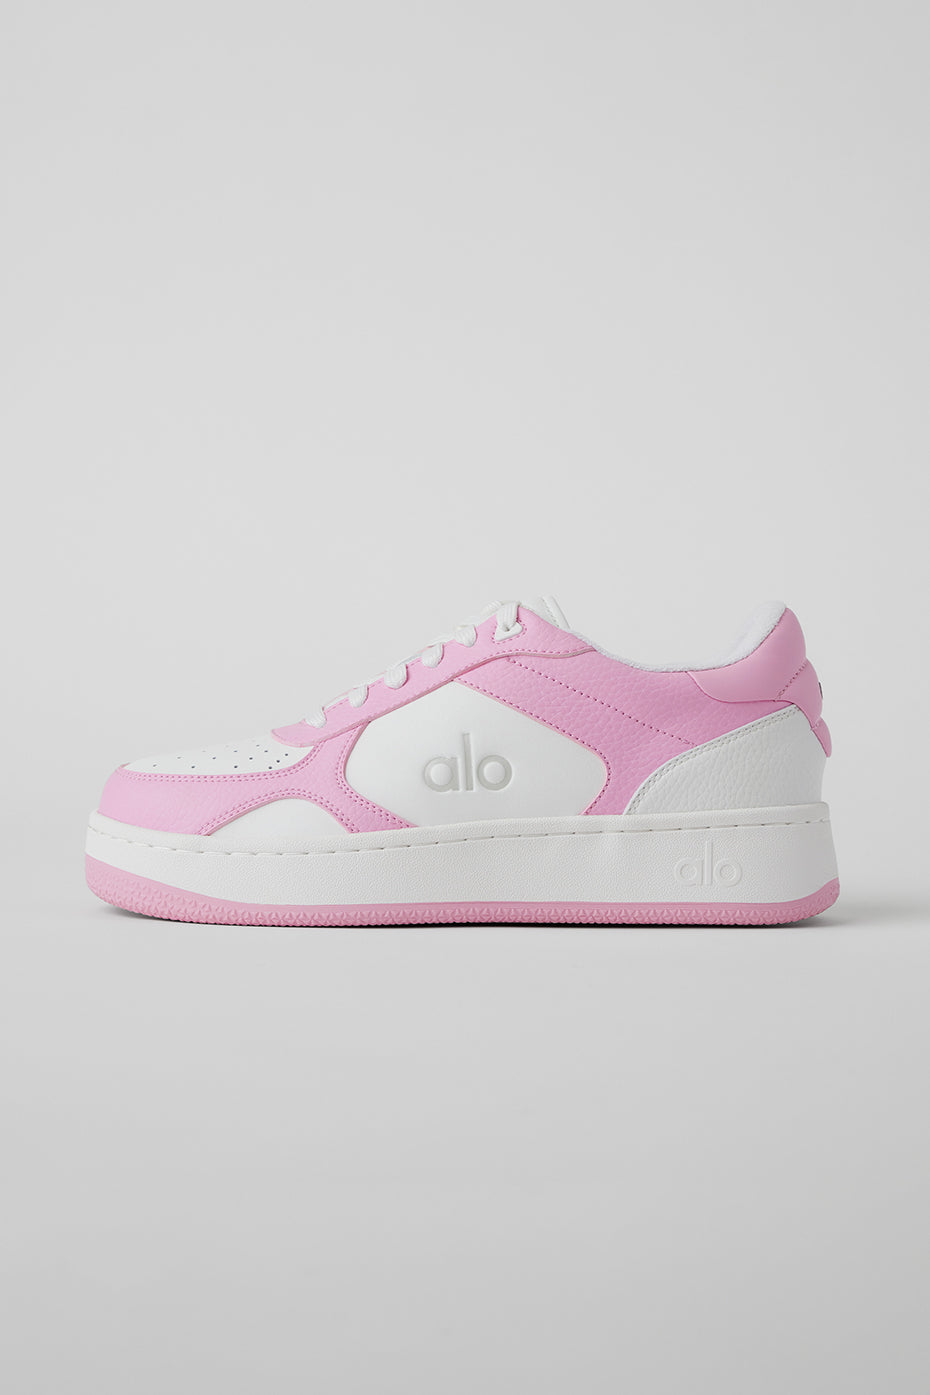 Alo x 01 Classic - Pink/White